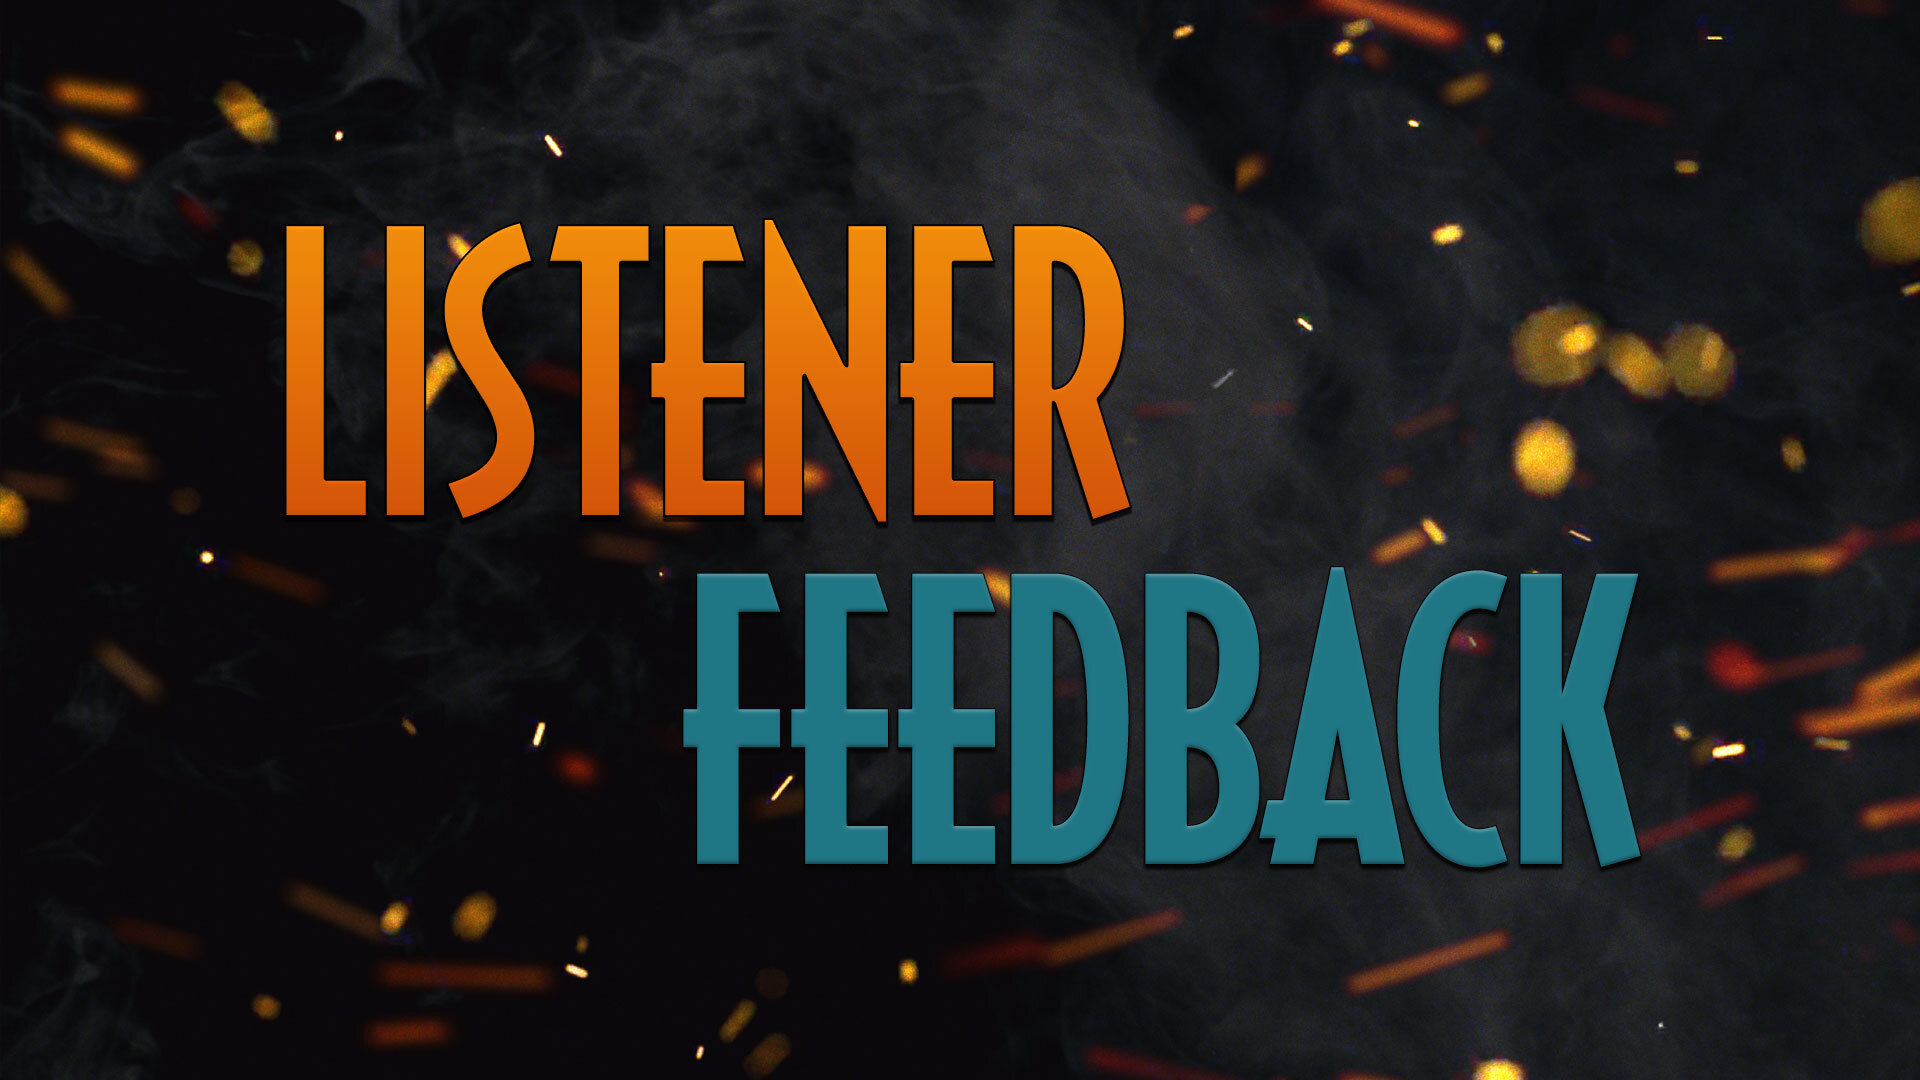 Listener-Feedback.jpg